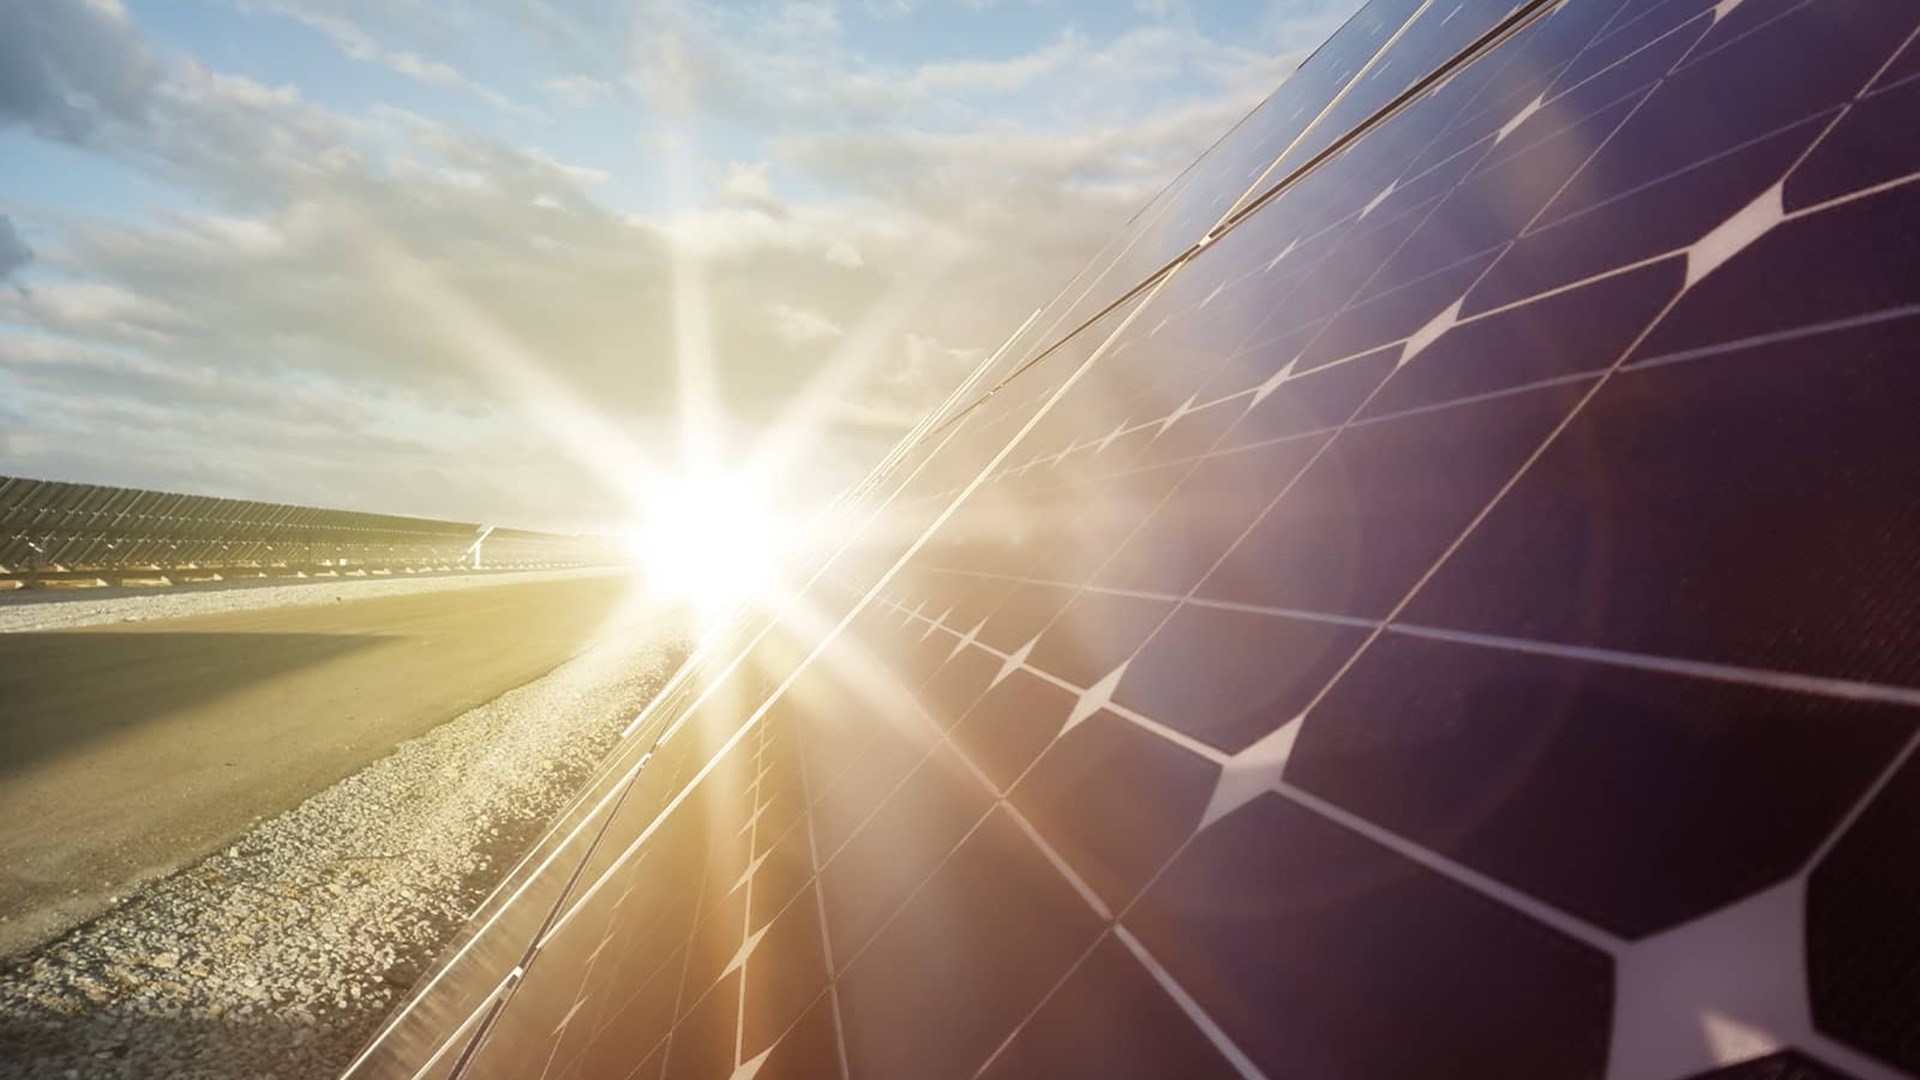 Solen skinner på solceller. Det giver vedvarende energi eller grøn energi, som det også kaldes. Men hvad er vedvarende energi ellers?